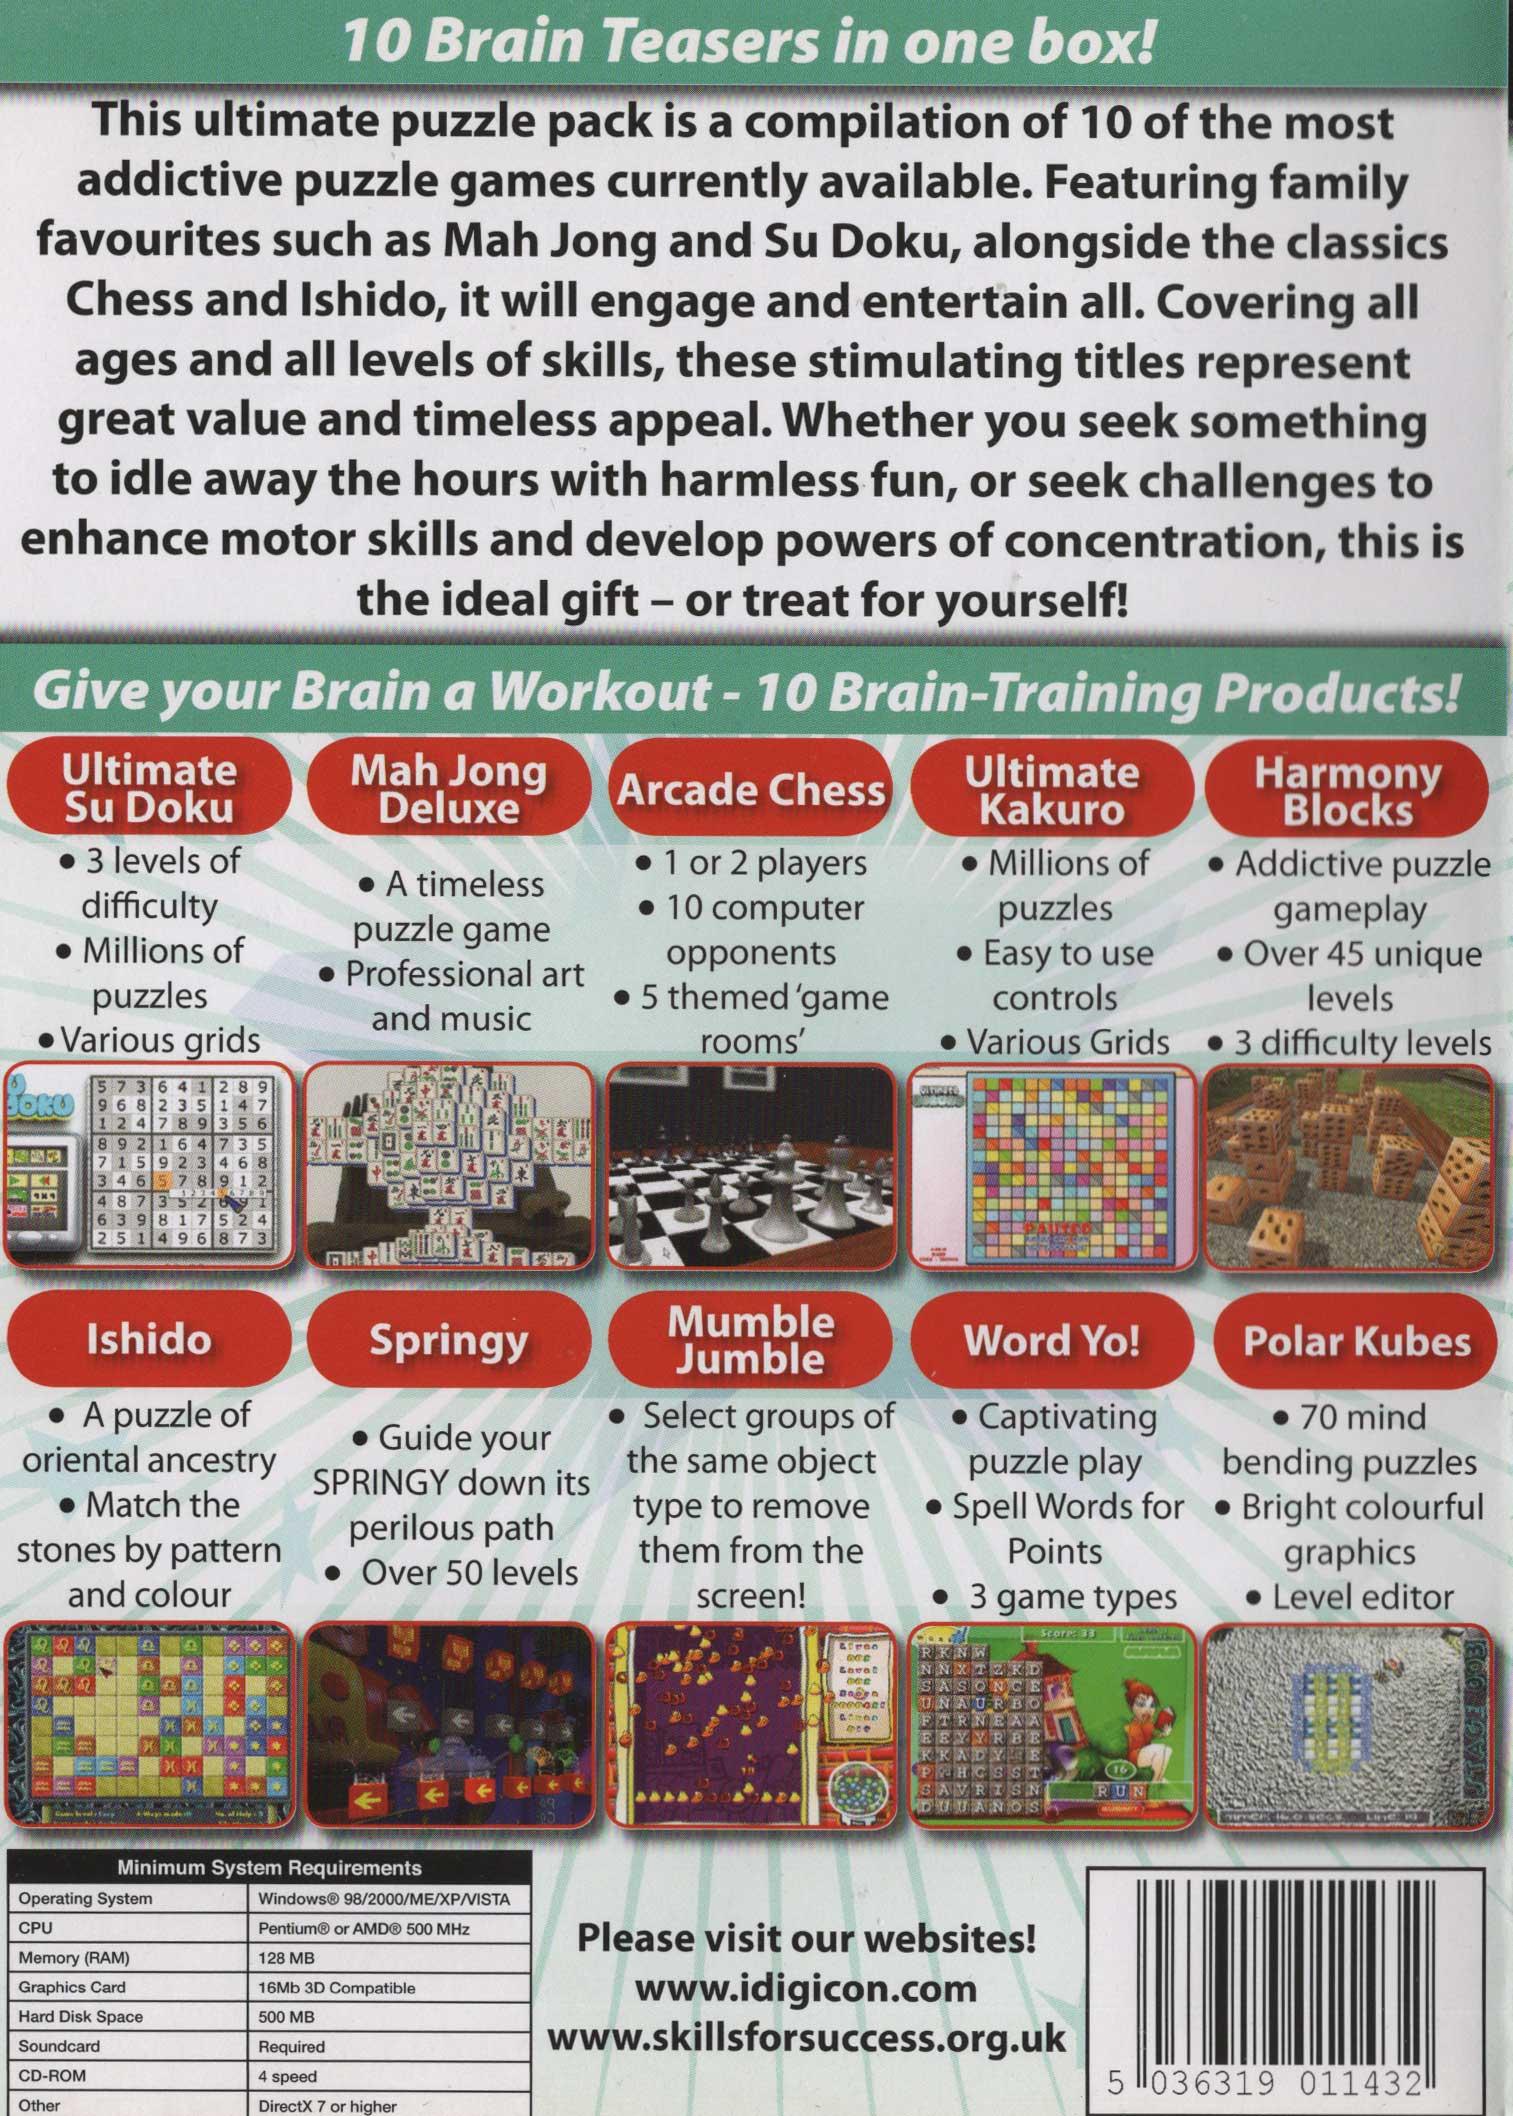 10 Brain Teaser Games - Classic Windows PC Game